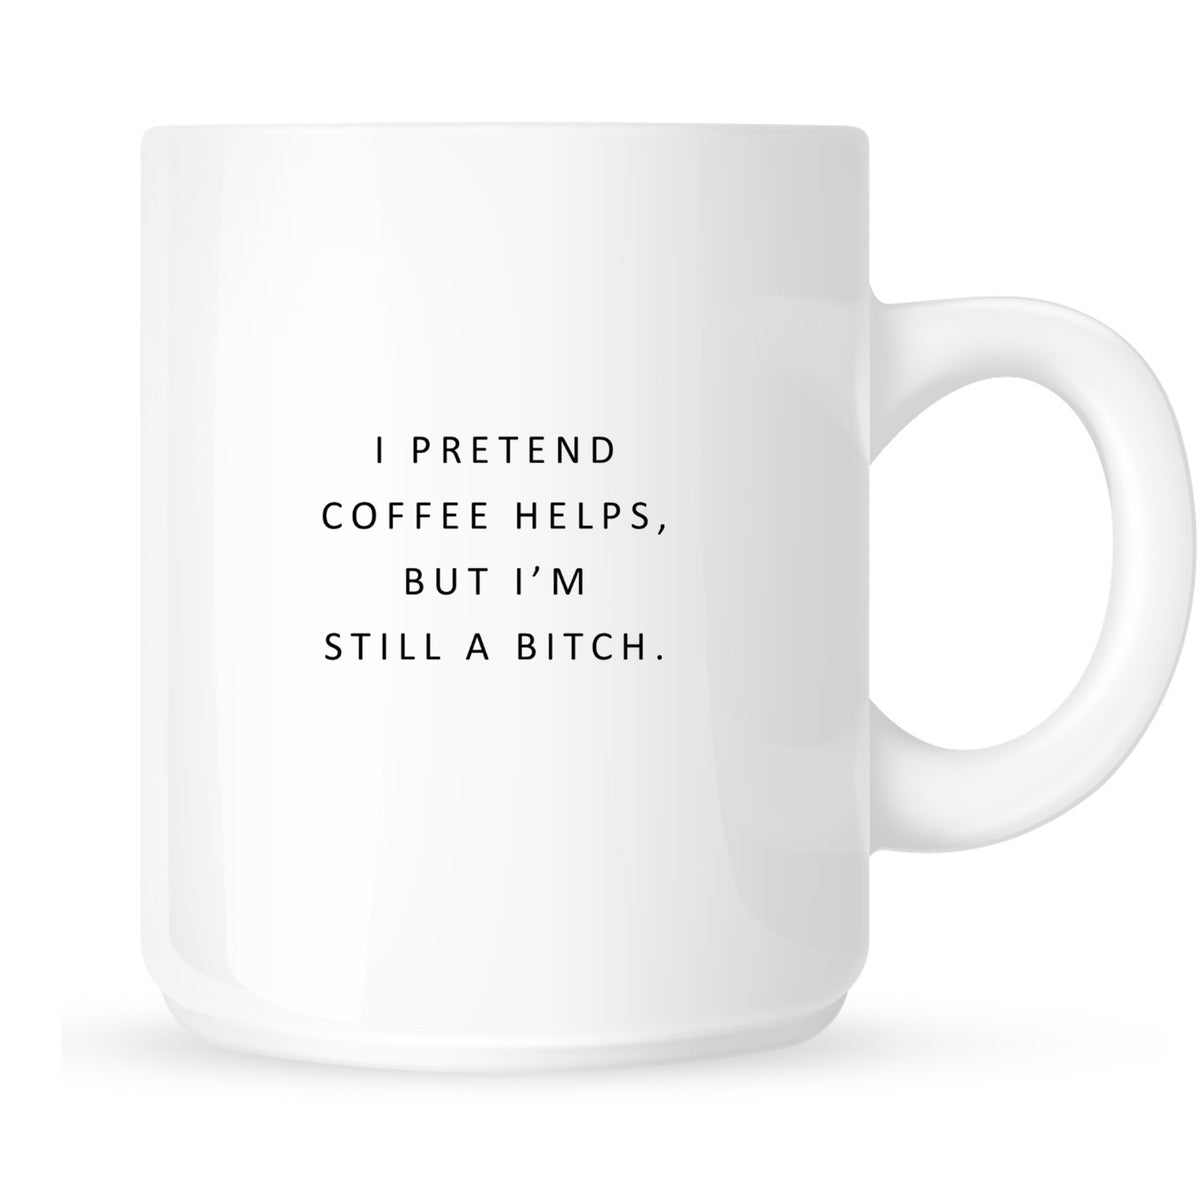 Mug - I Pretend Coffee Helps But I'm Still a Bitch